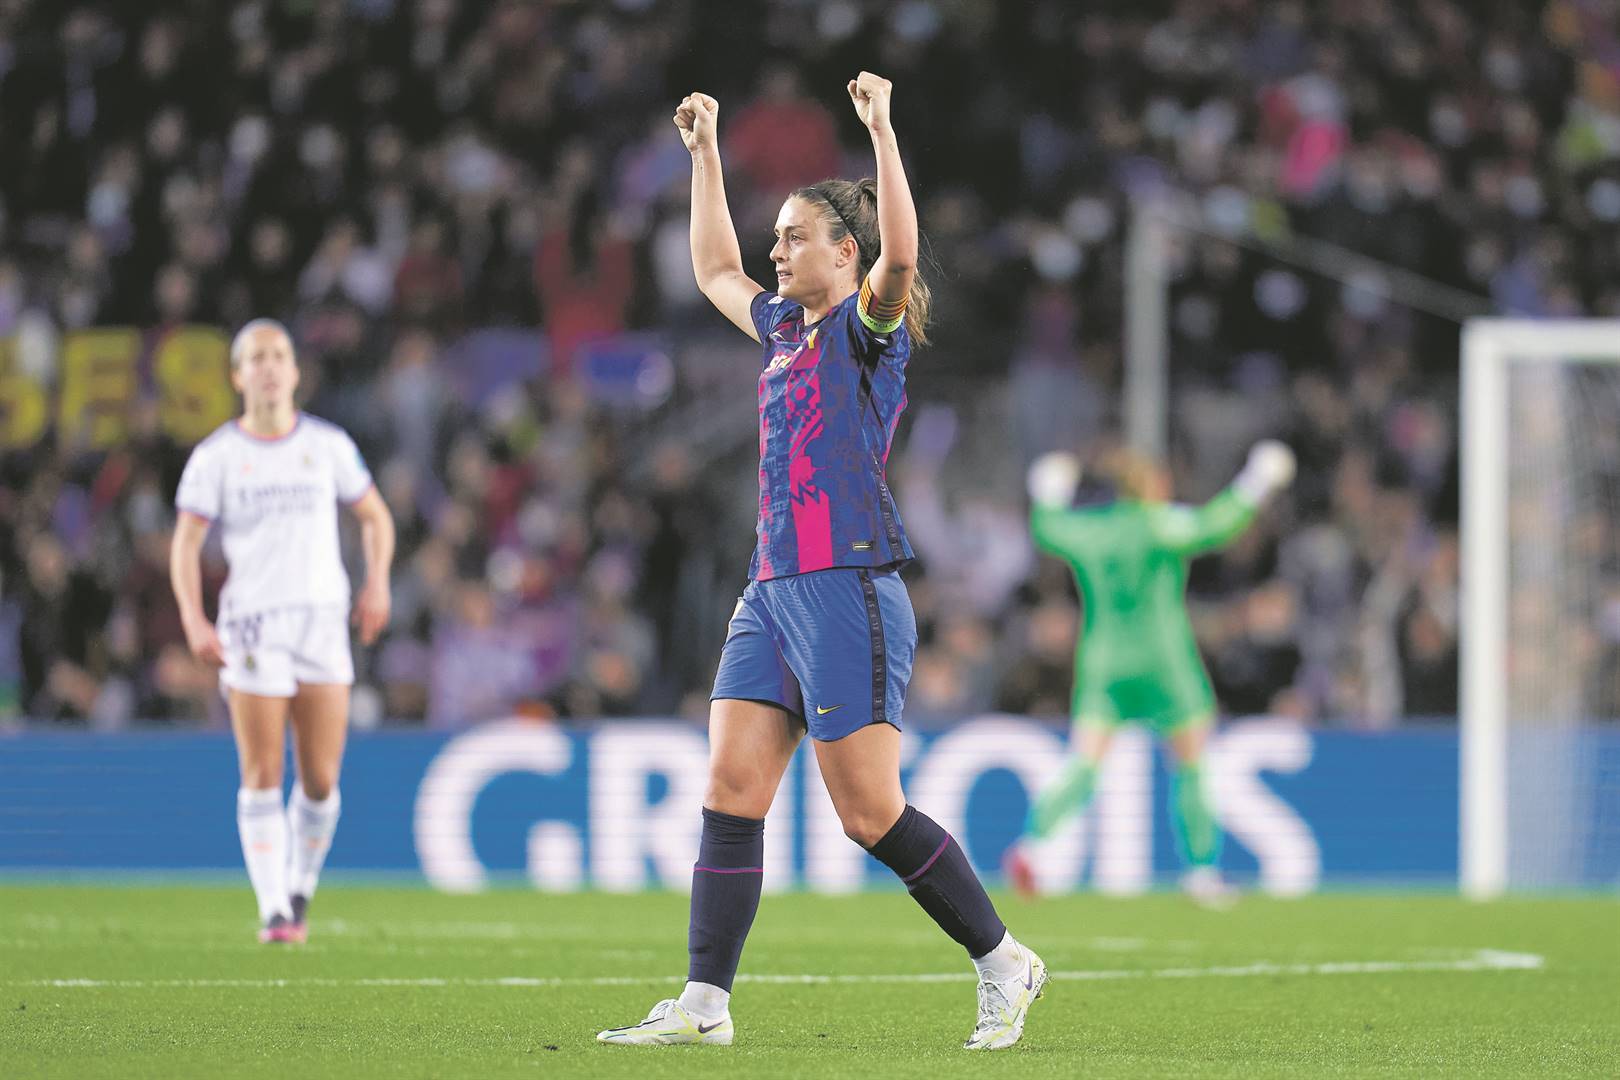 Barcelona women’s team captain Alexia Putellas. Photo: Pedro Salado / Quality Sport Images / Getty Images